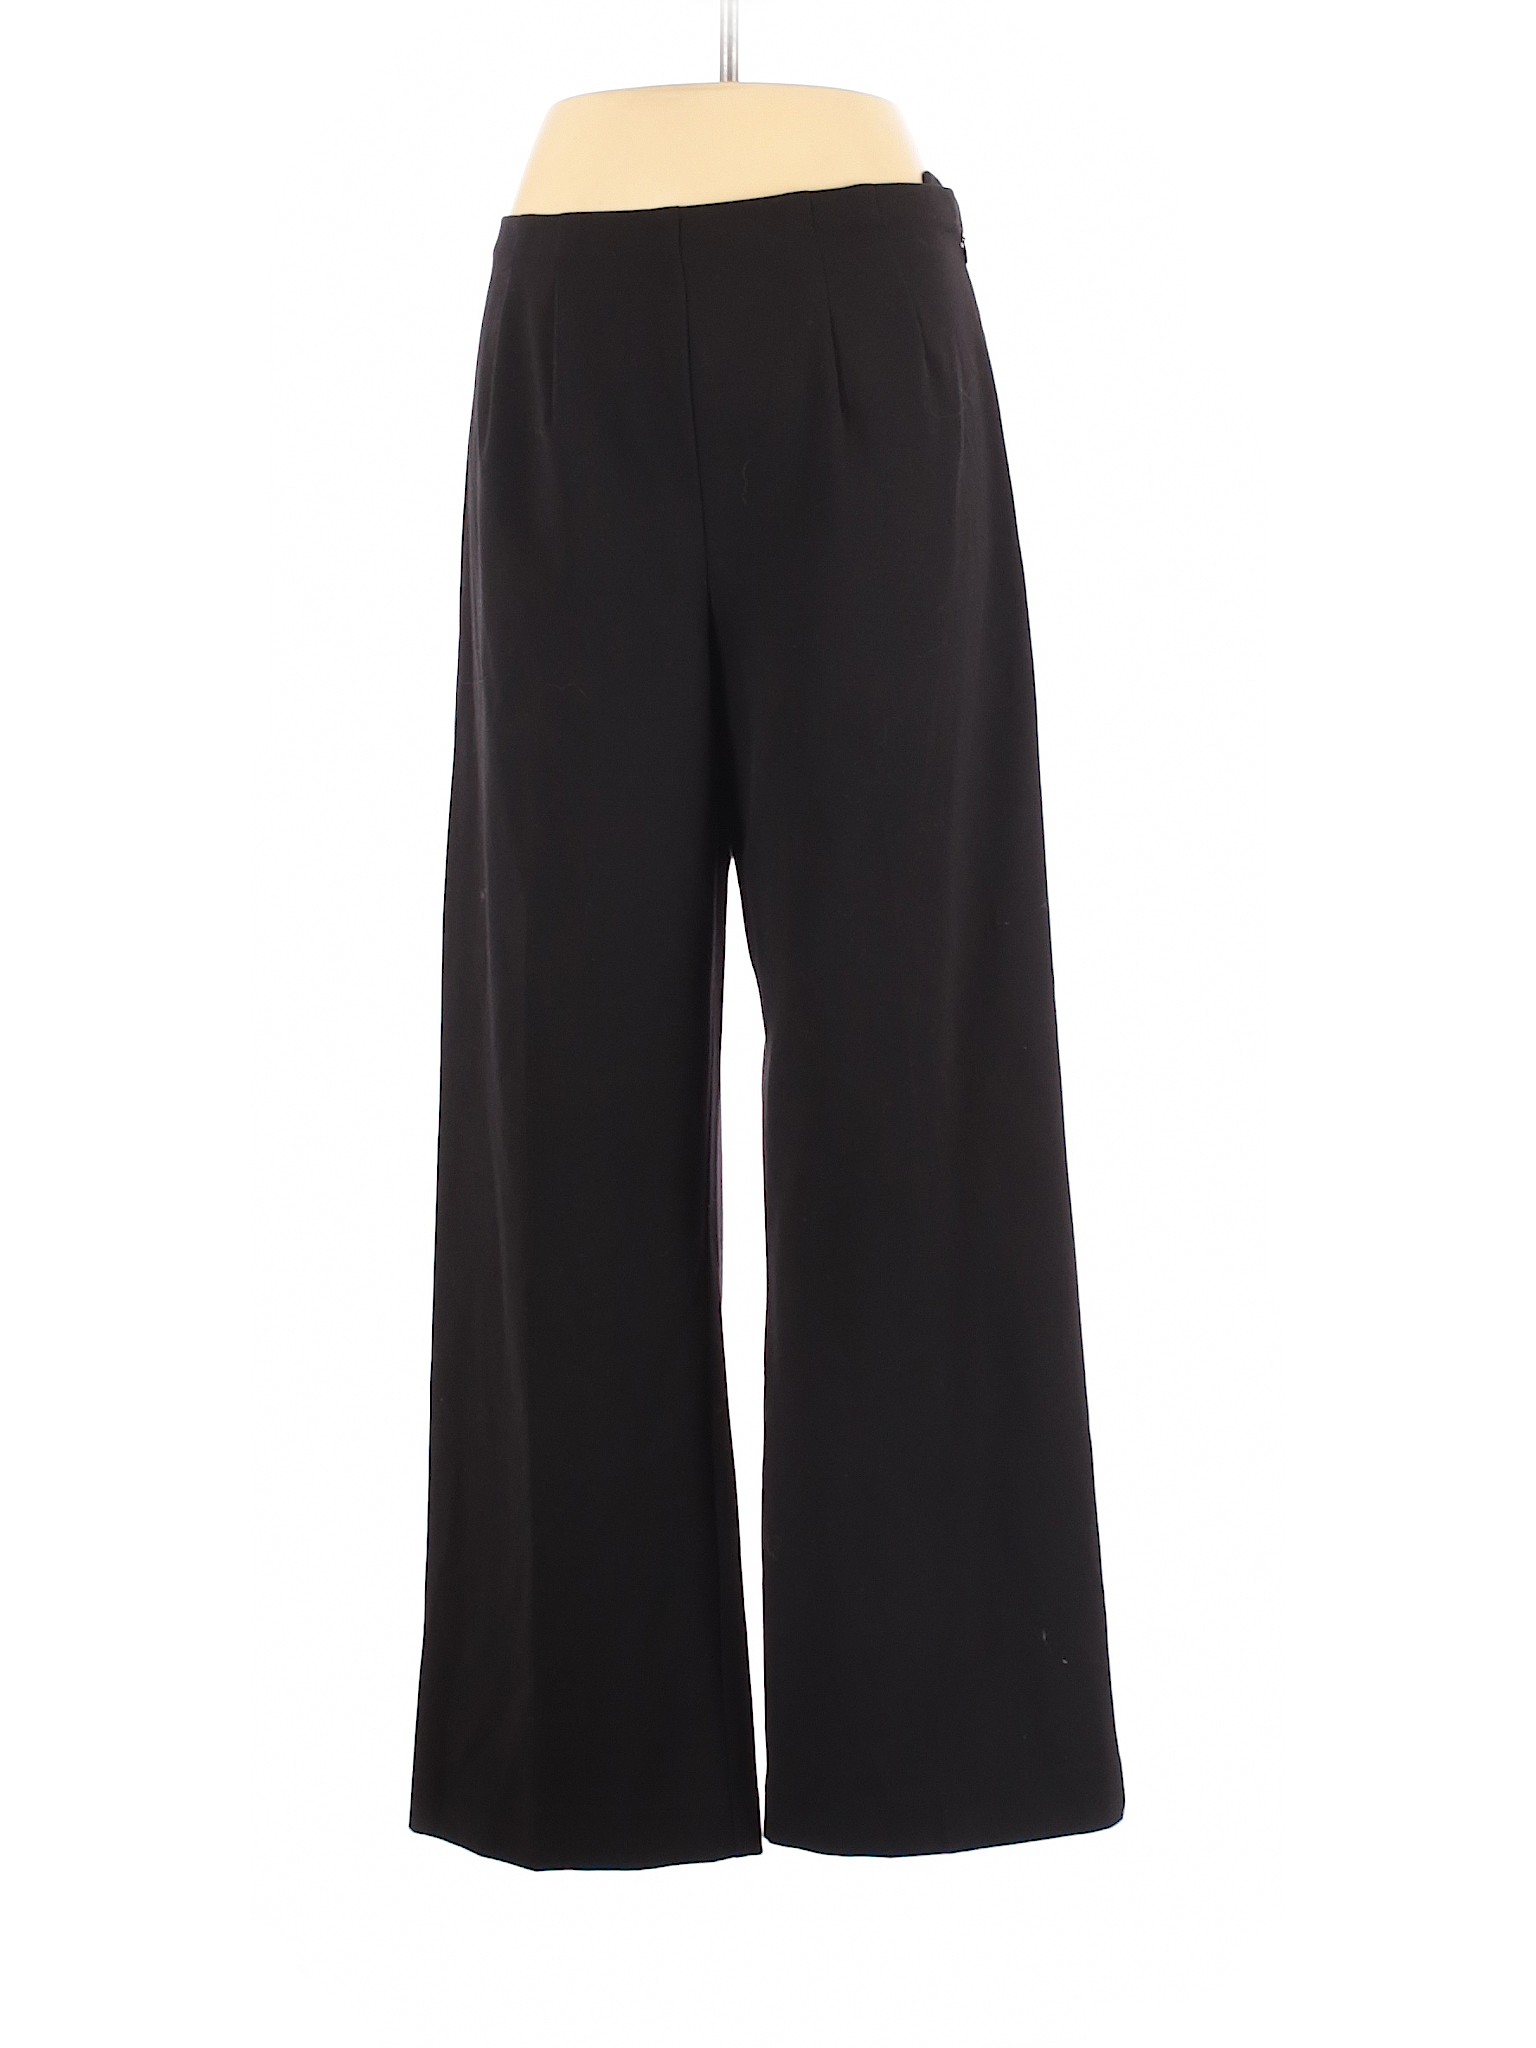 East 5th Women Black Casual Pants 12 | eBay